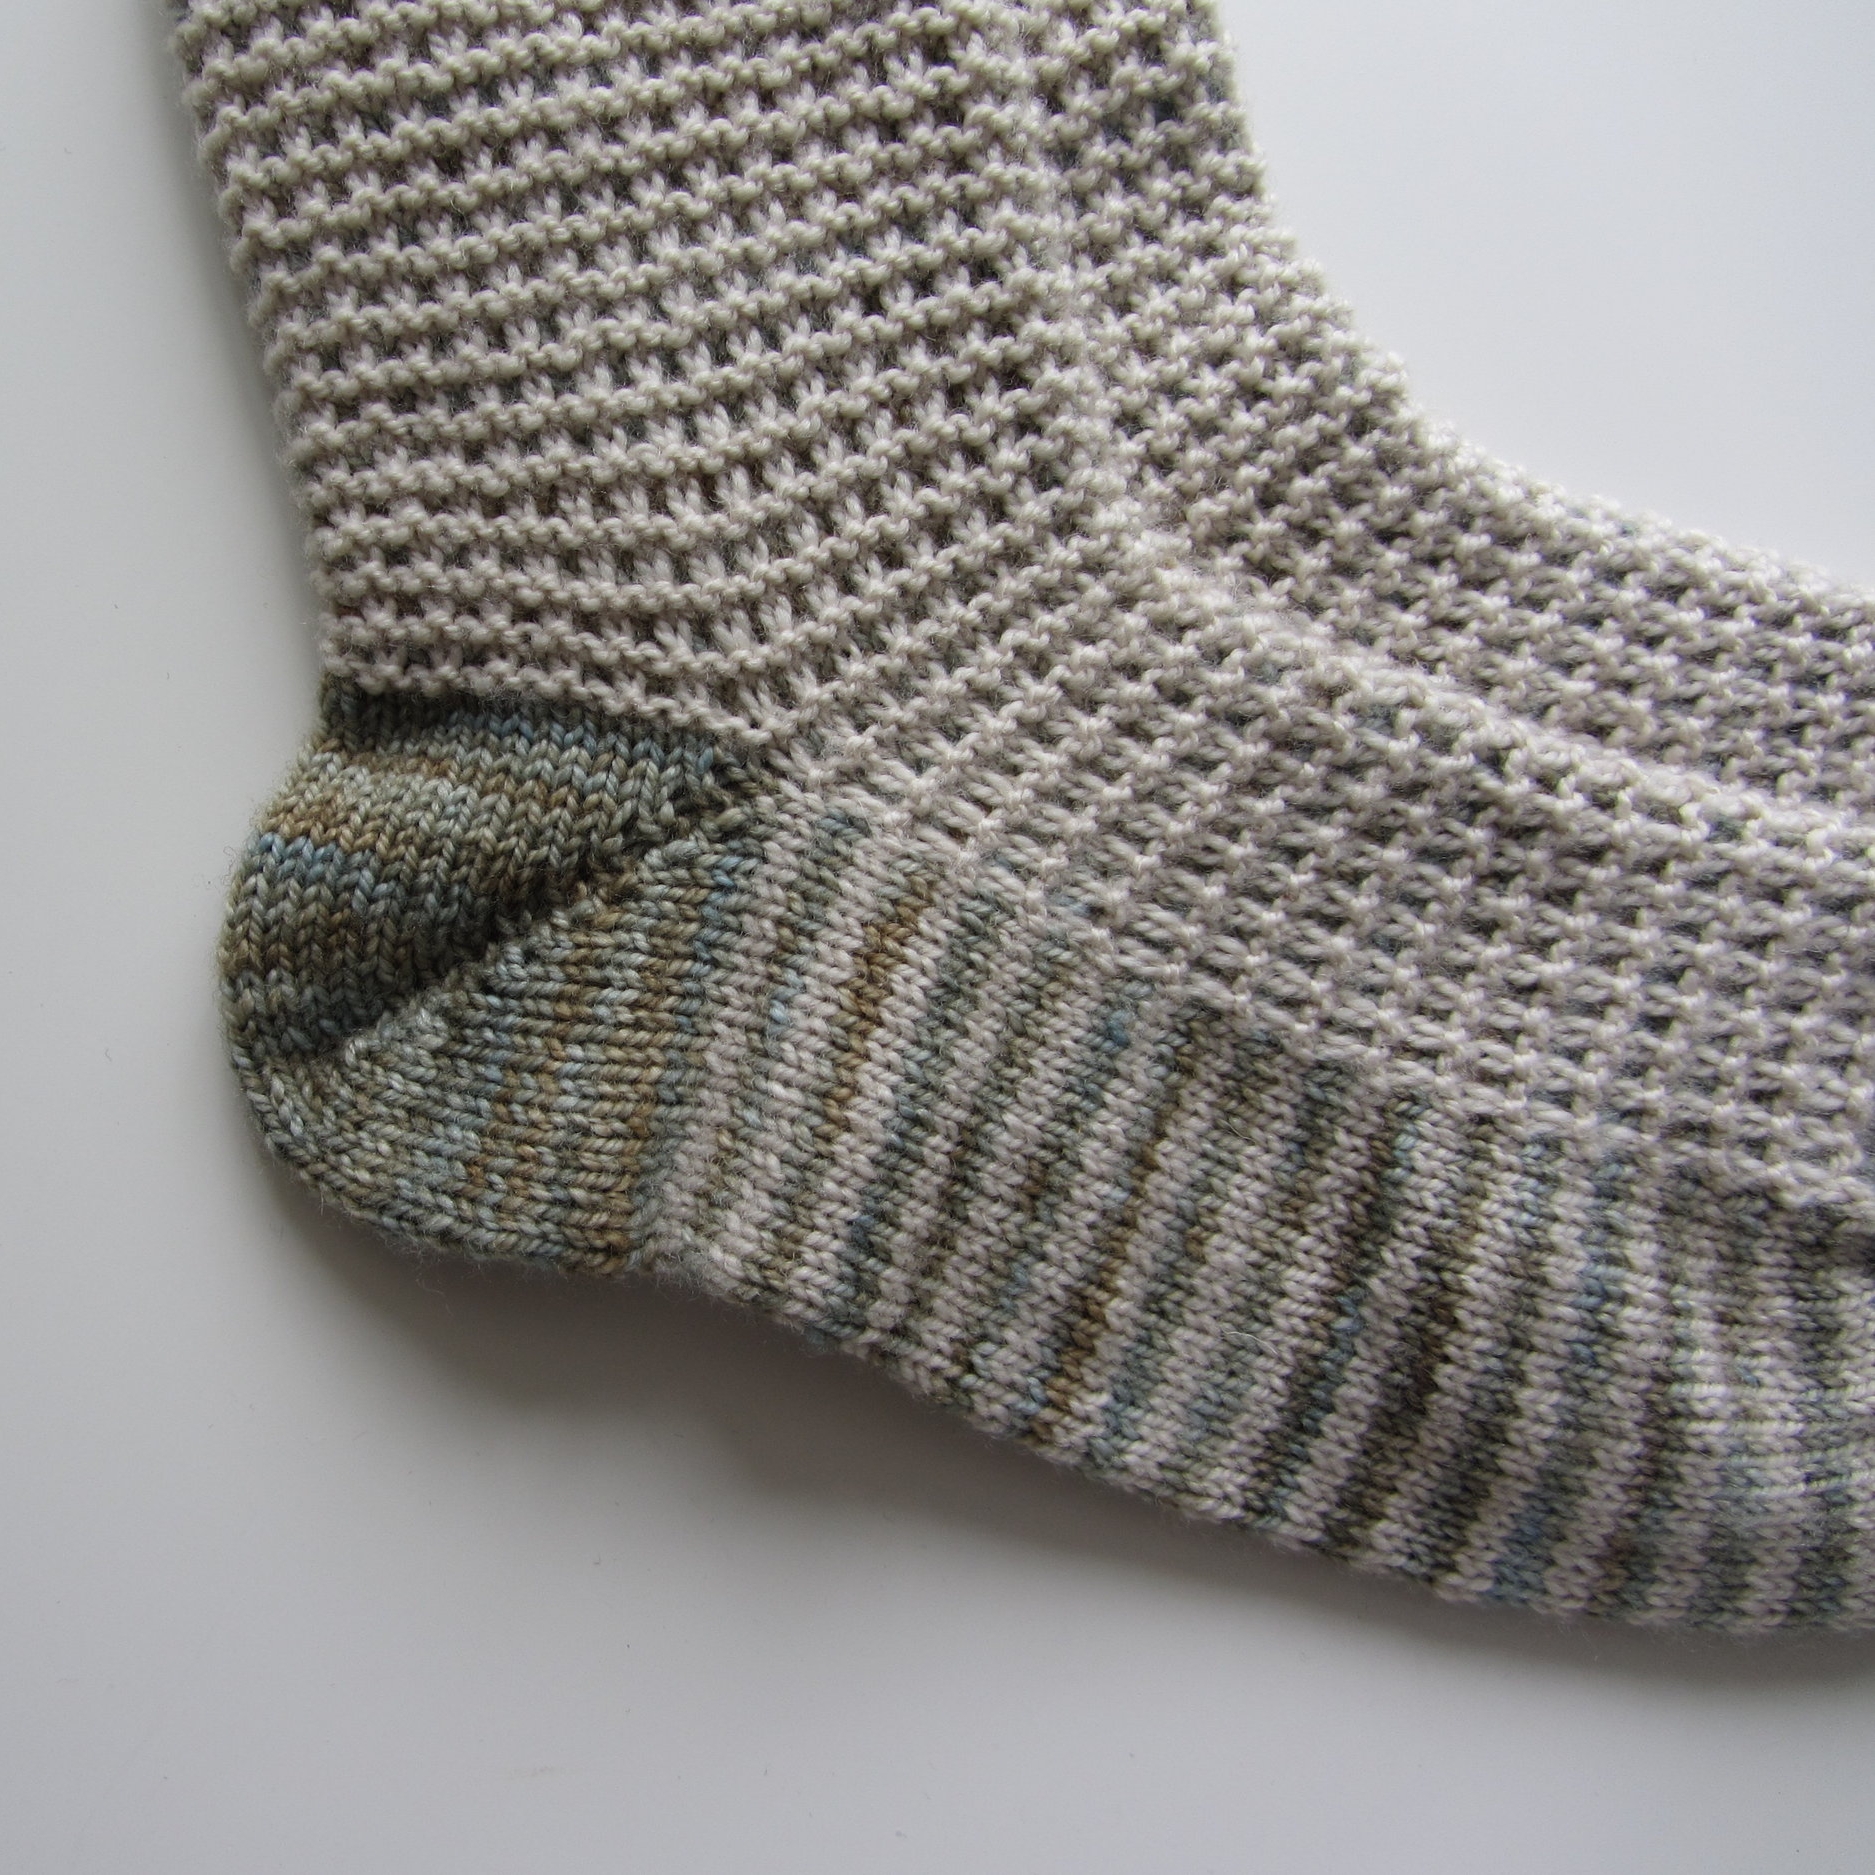 knitting a heel on a sock